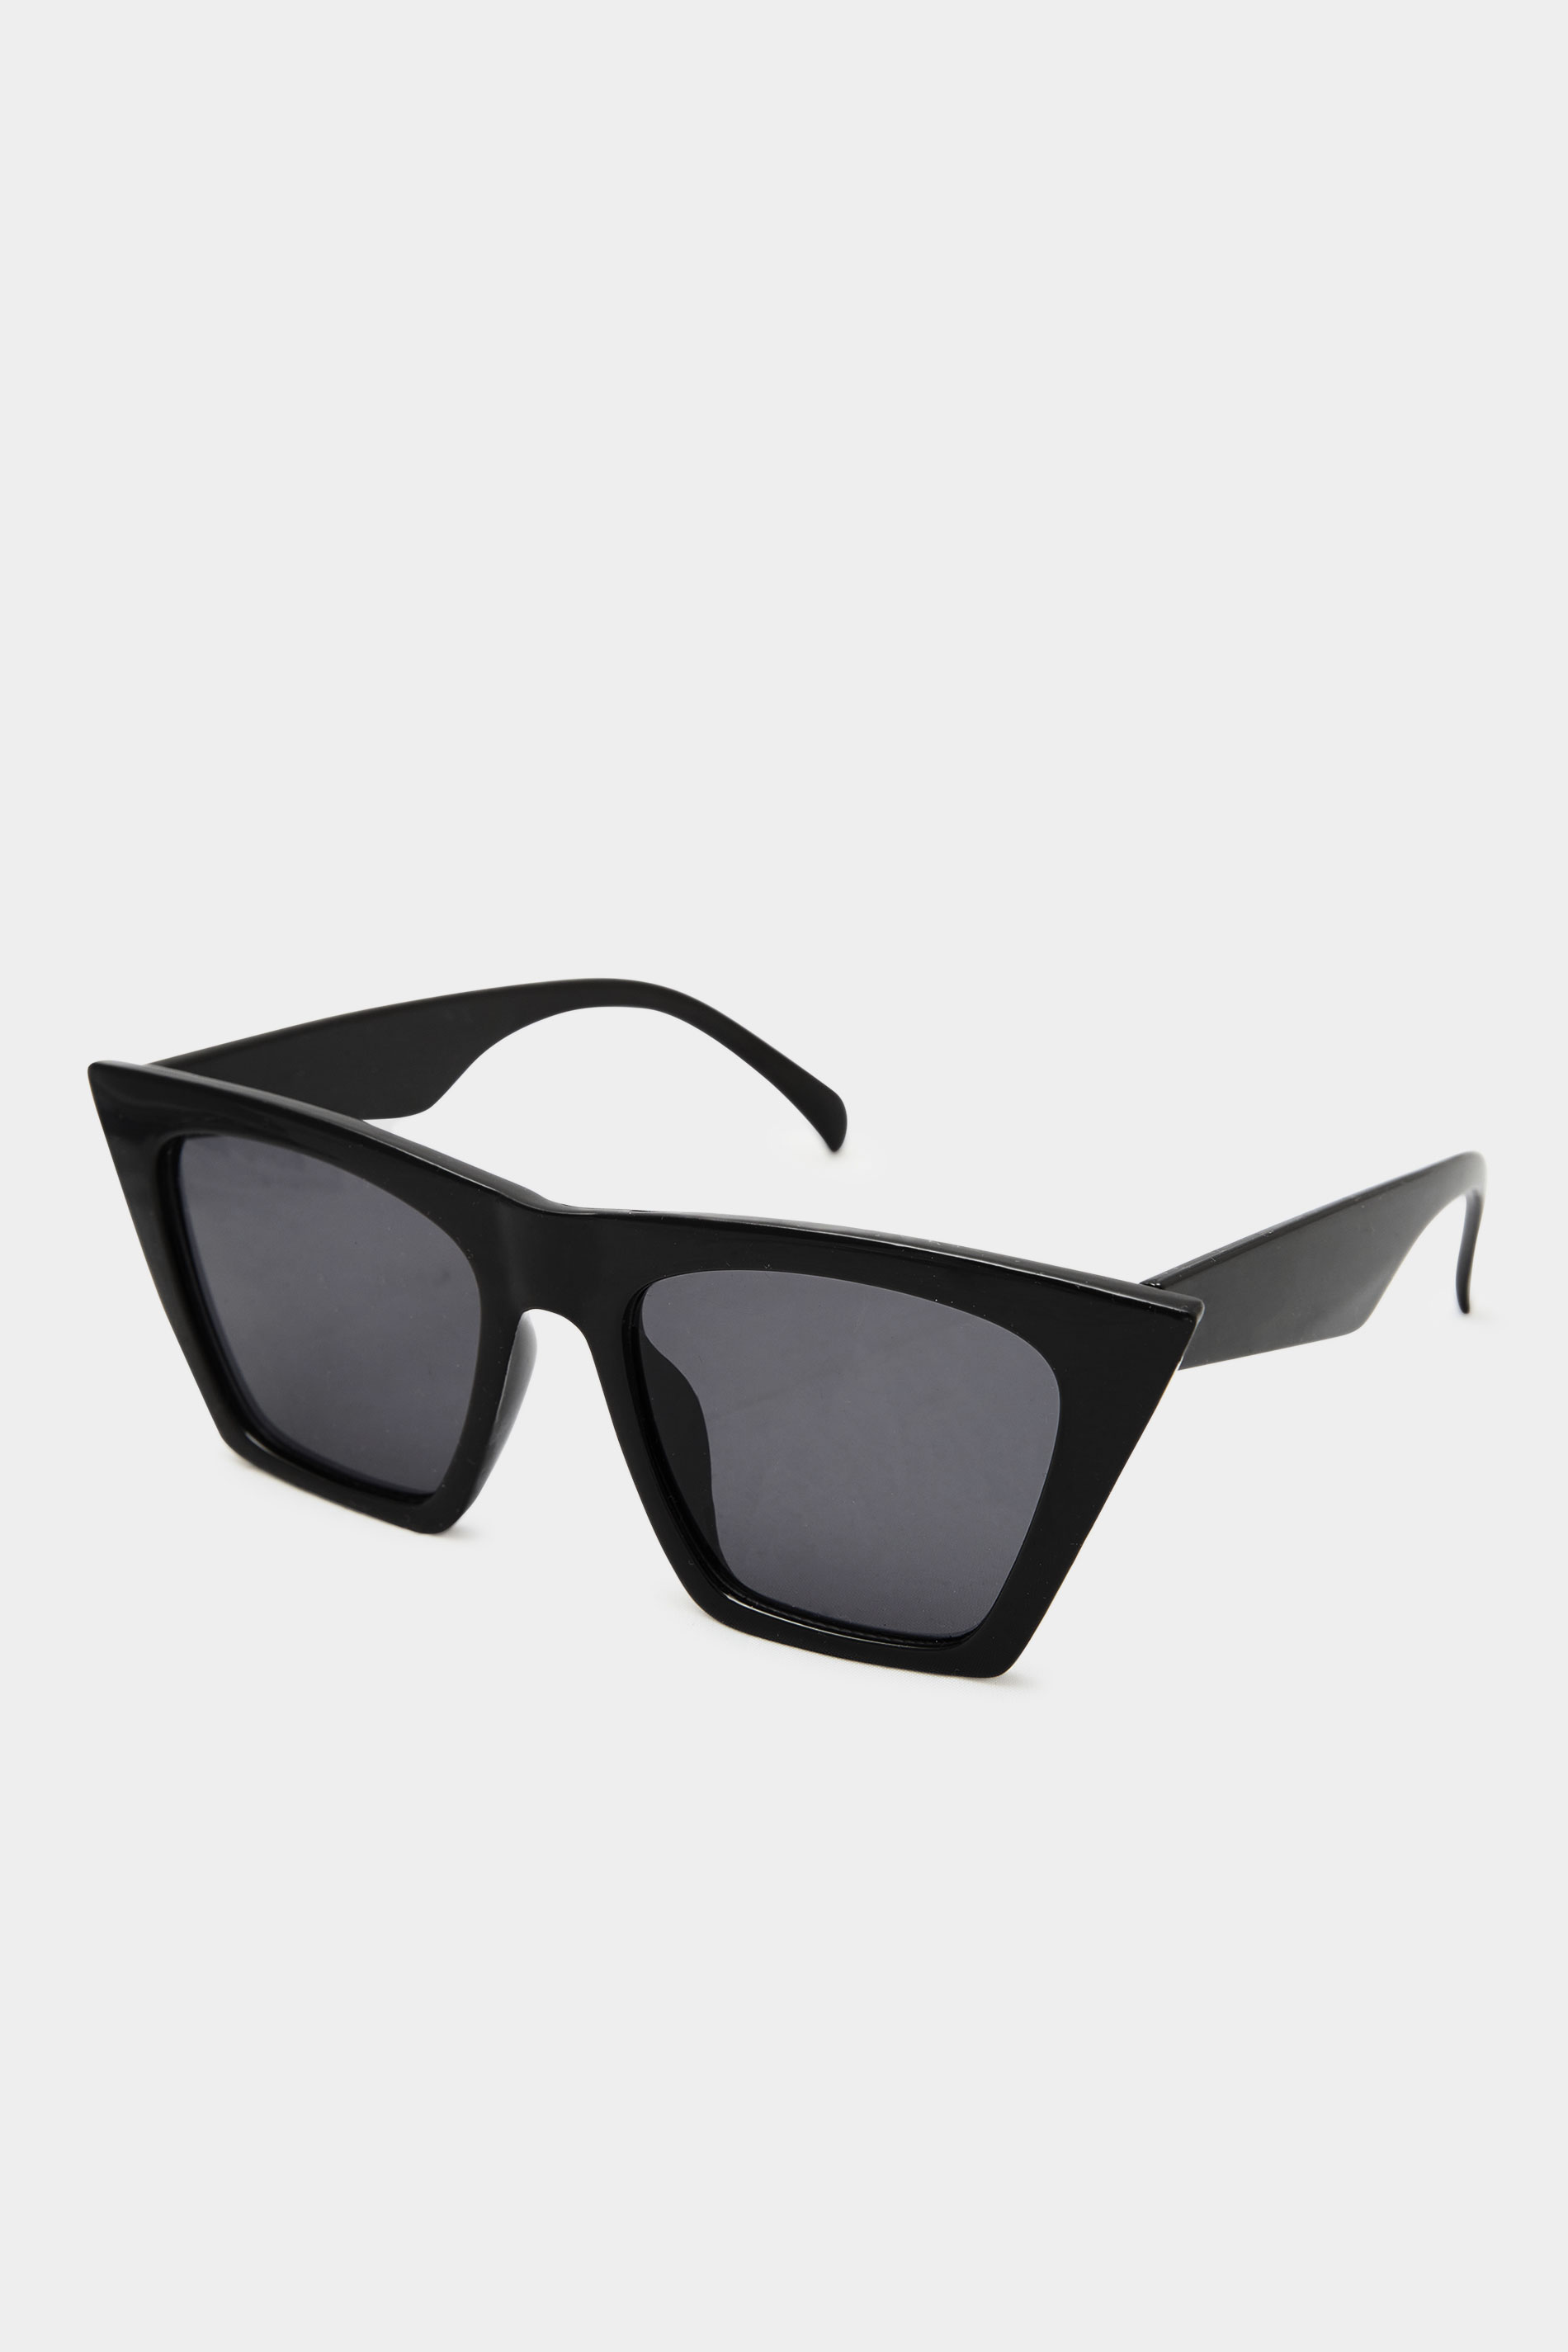 Black Cat Eye Frame Sunglasses | Long Tall Sally